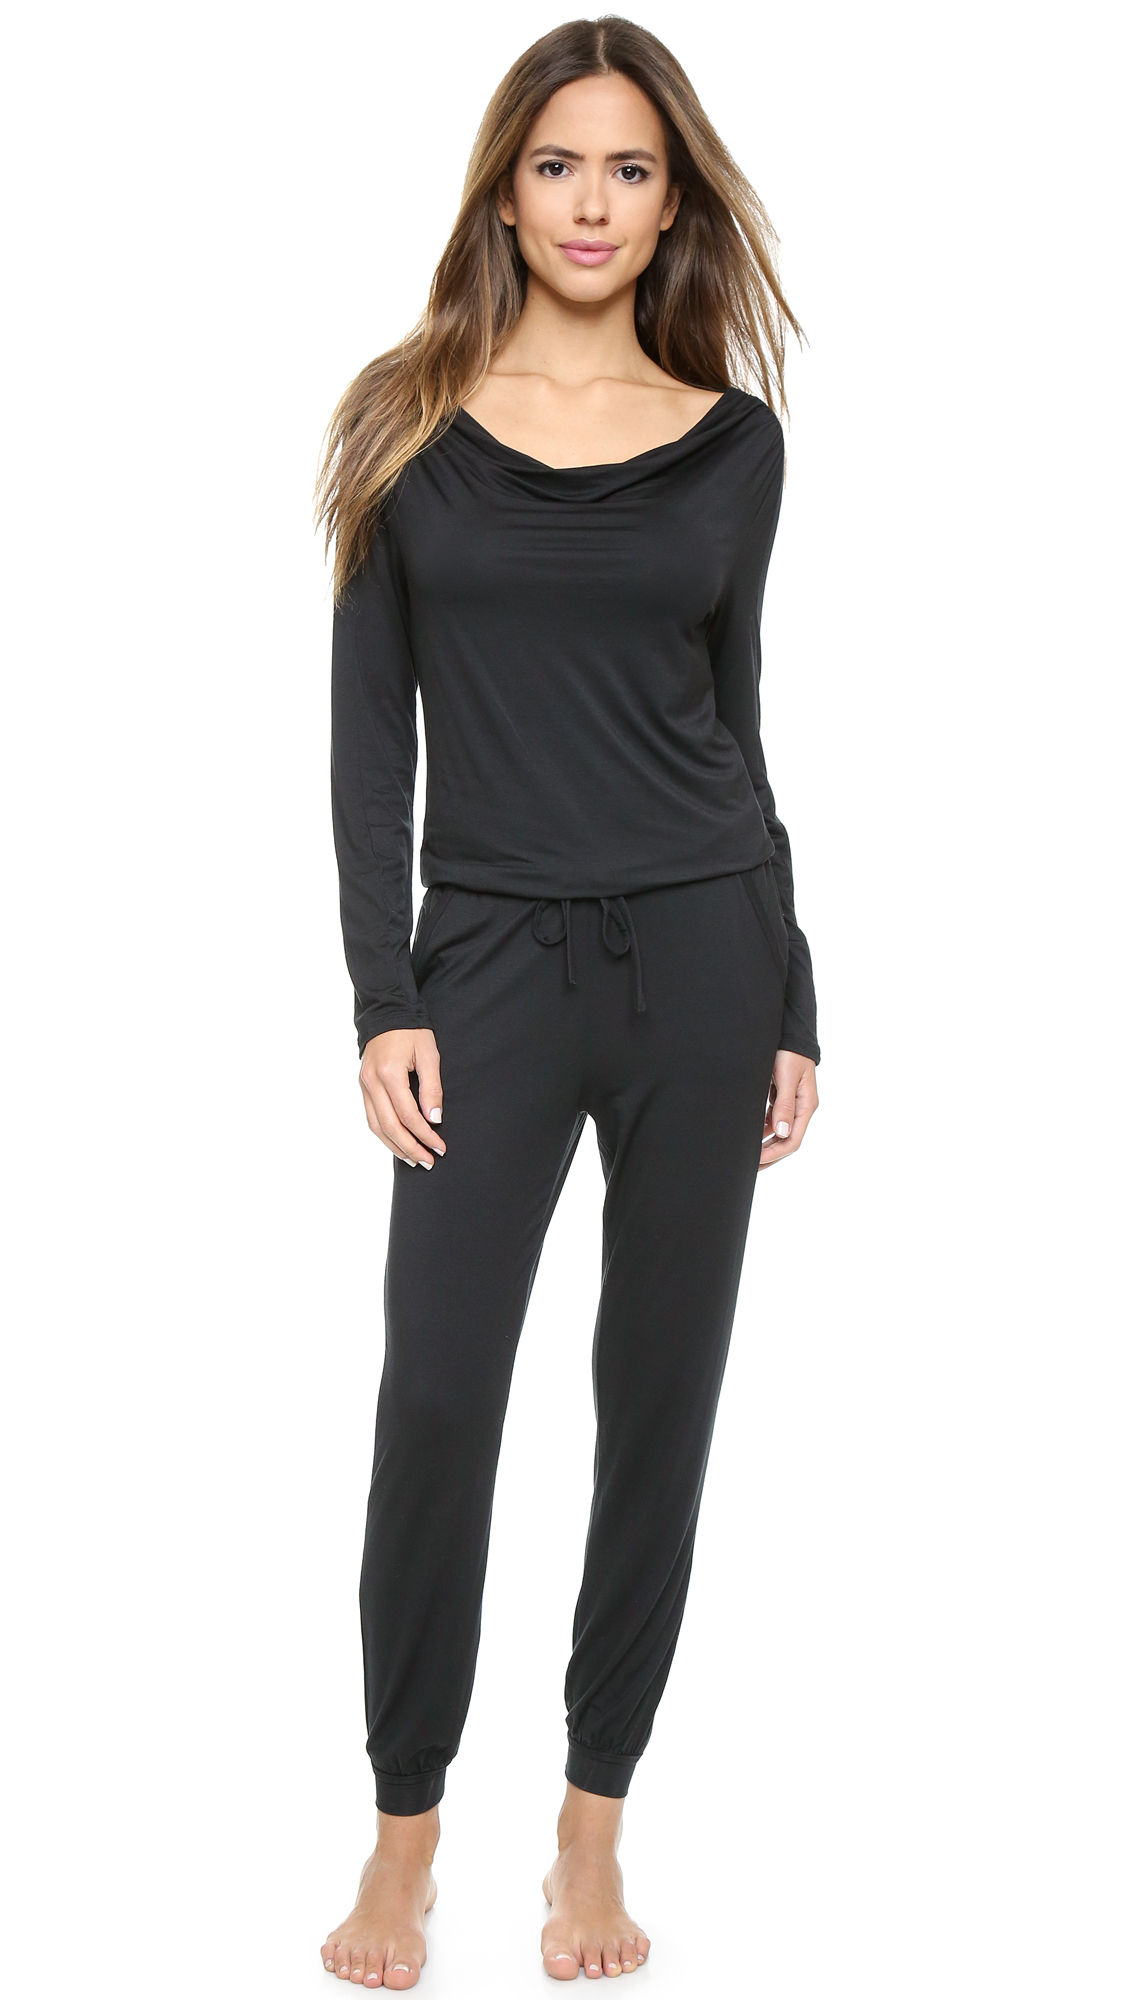 Lyst - Calvin Klein Edge Jumpsuit - Light Grey Heather in Black